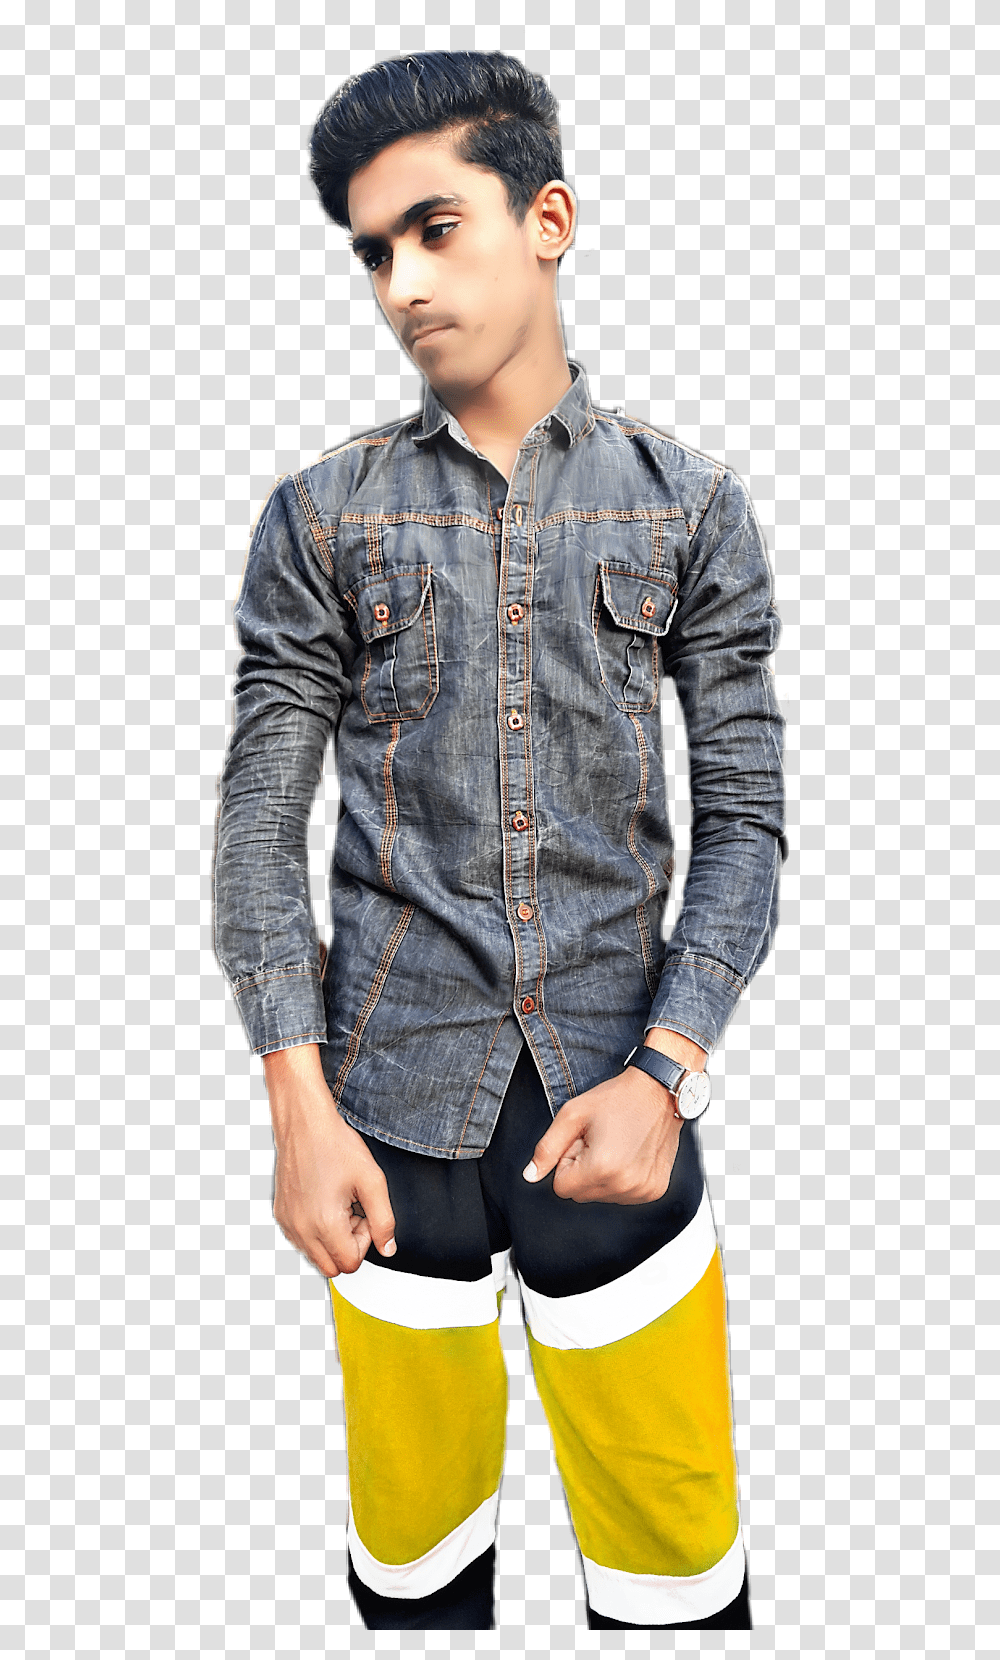 Pikachu Photoediting Model Pocket, Apparel, Pants, Jeans Transparent Png